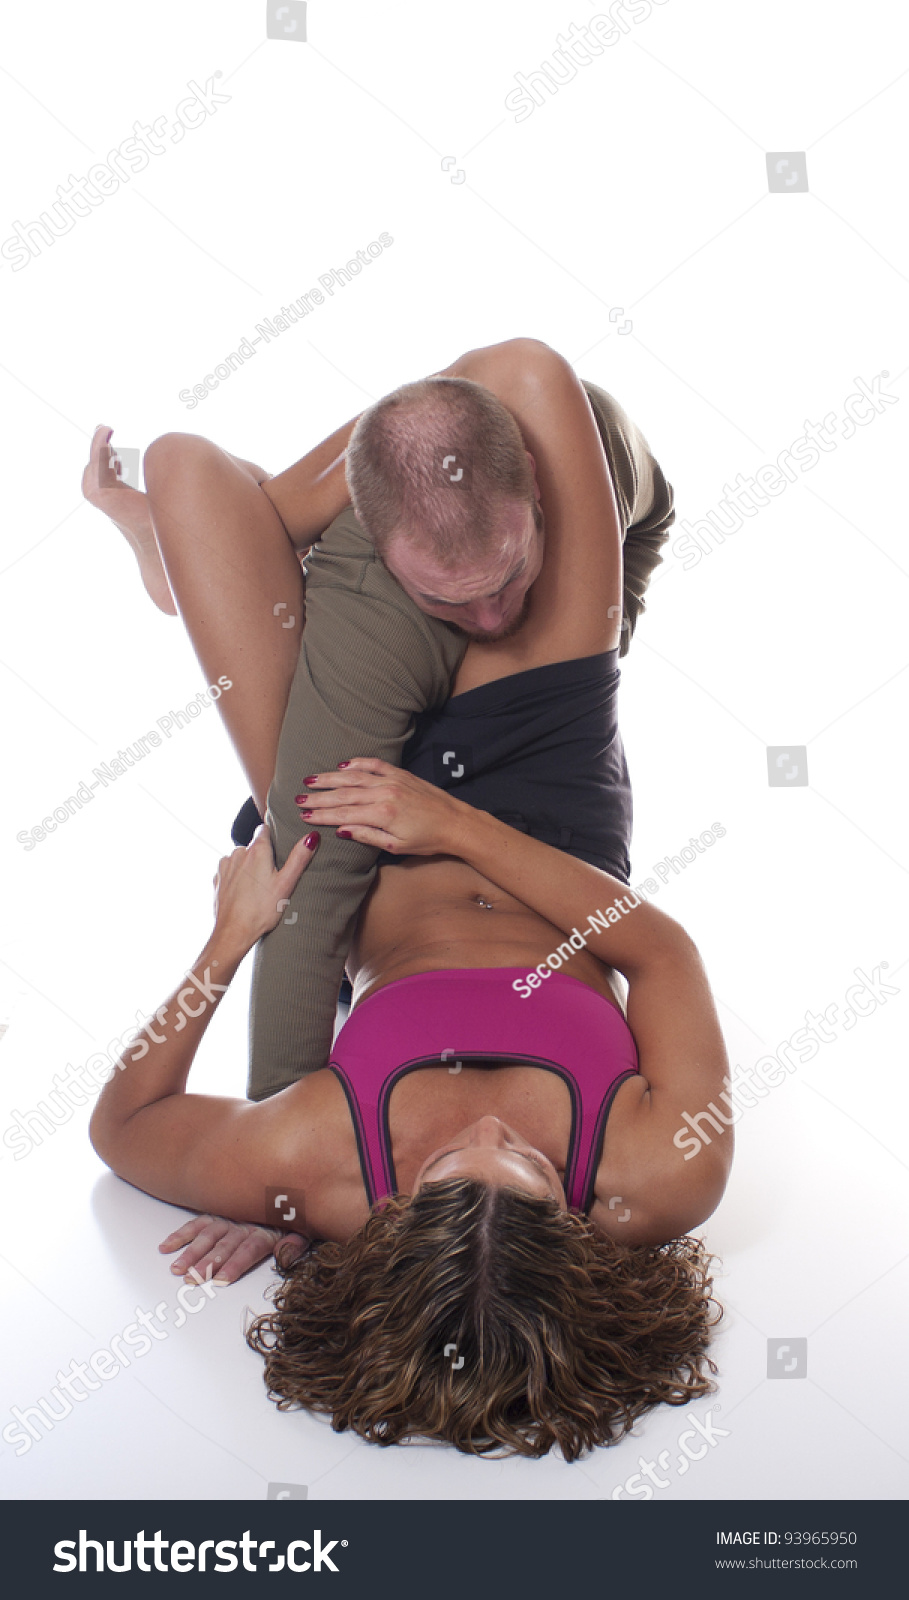 Woman Mma Attire Applying Triangle Choke Foto Stok 93965950 Shutterstock.